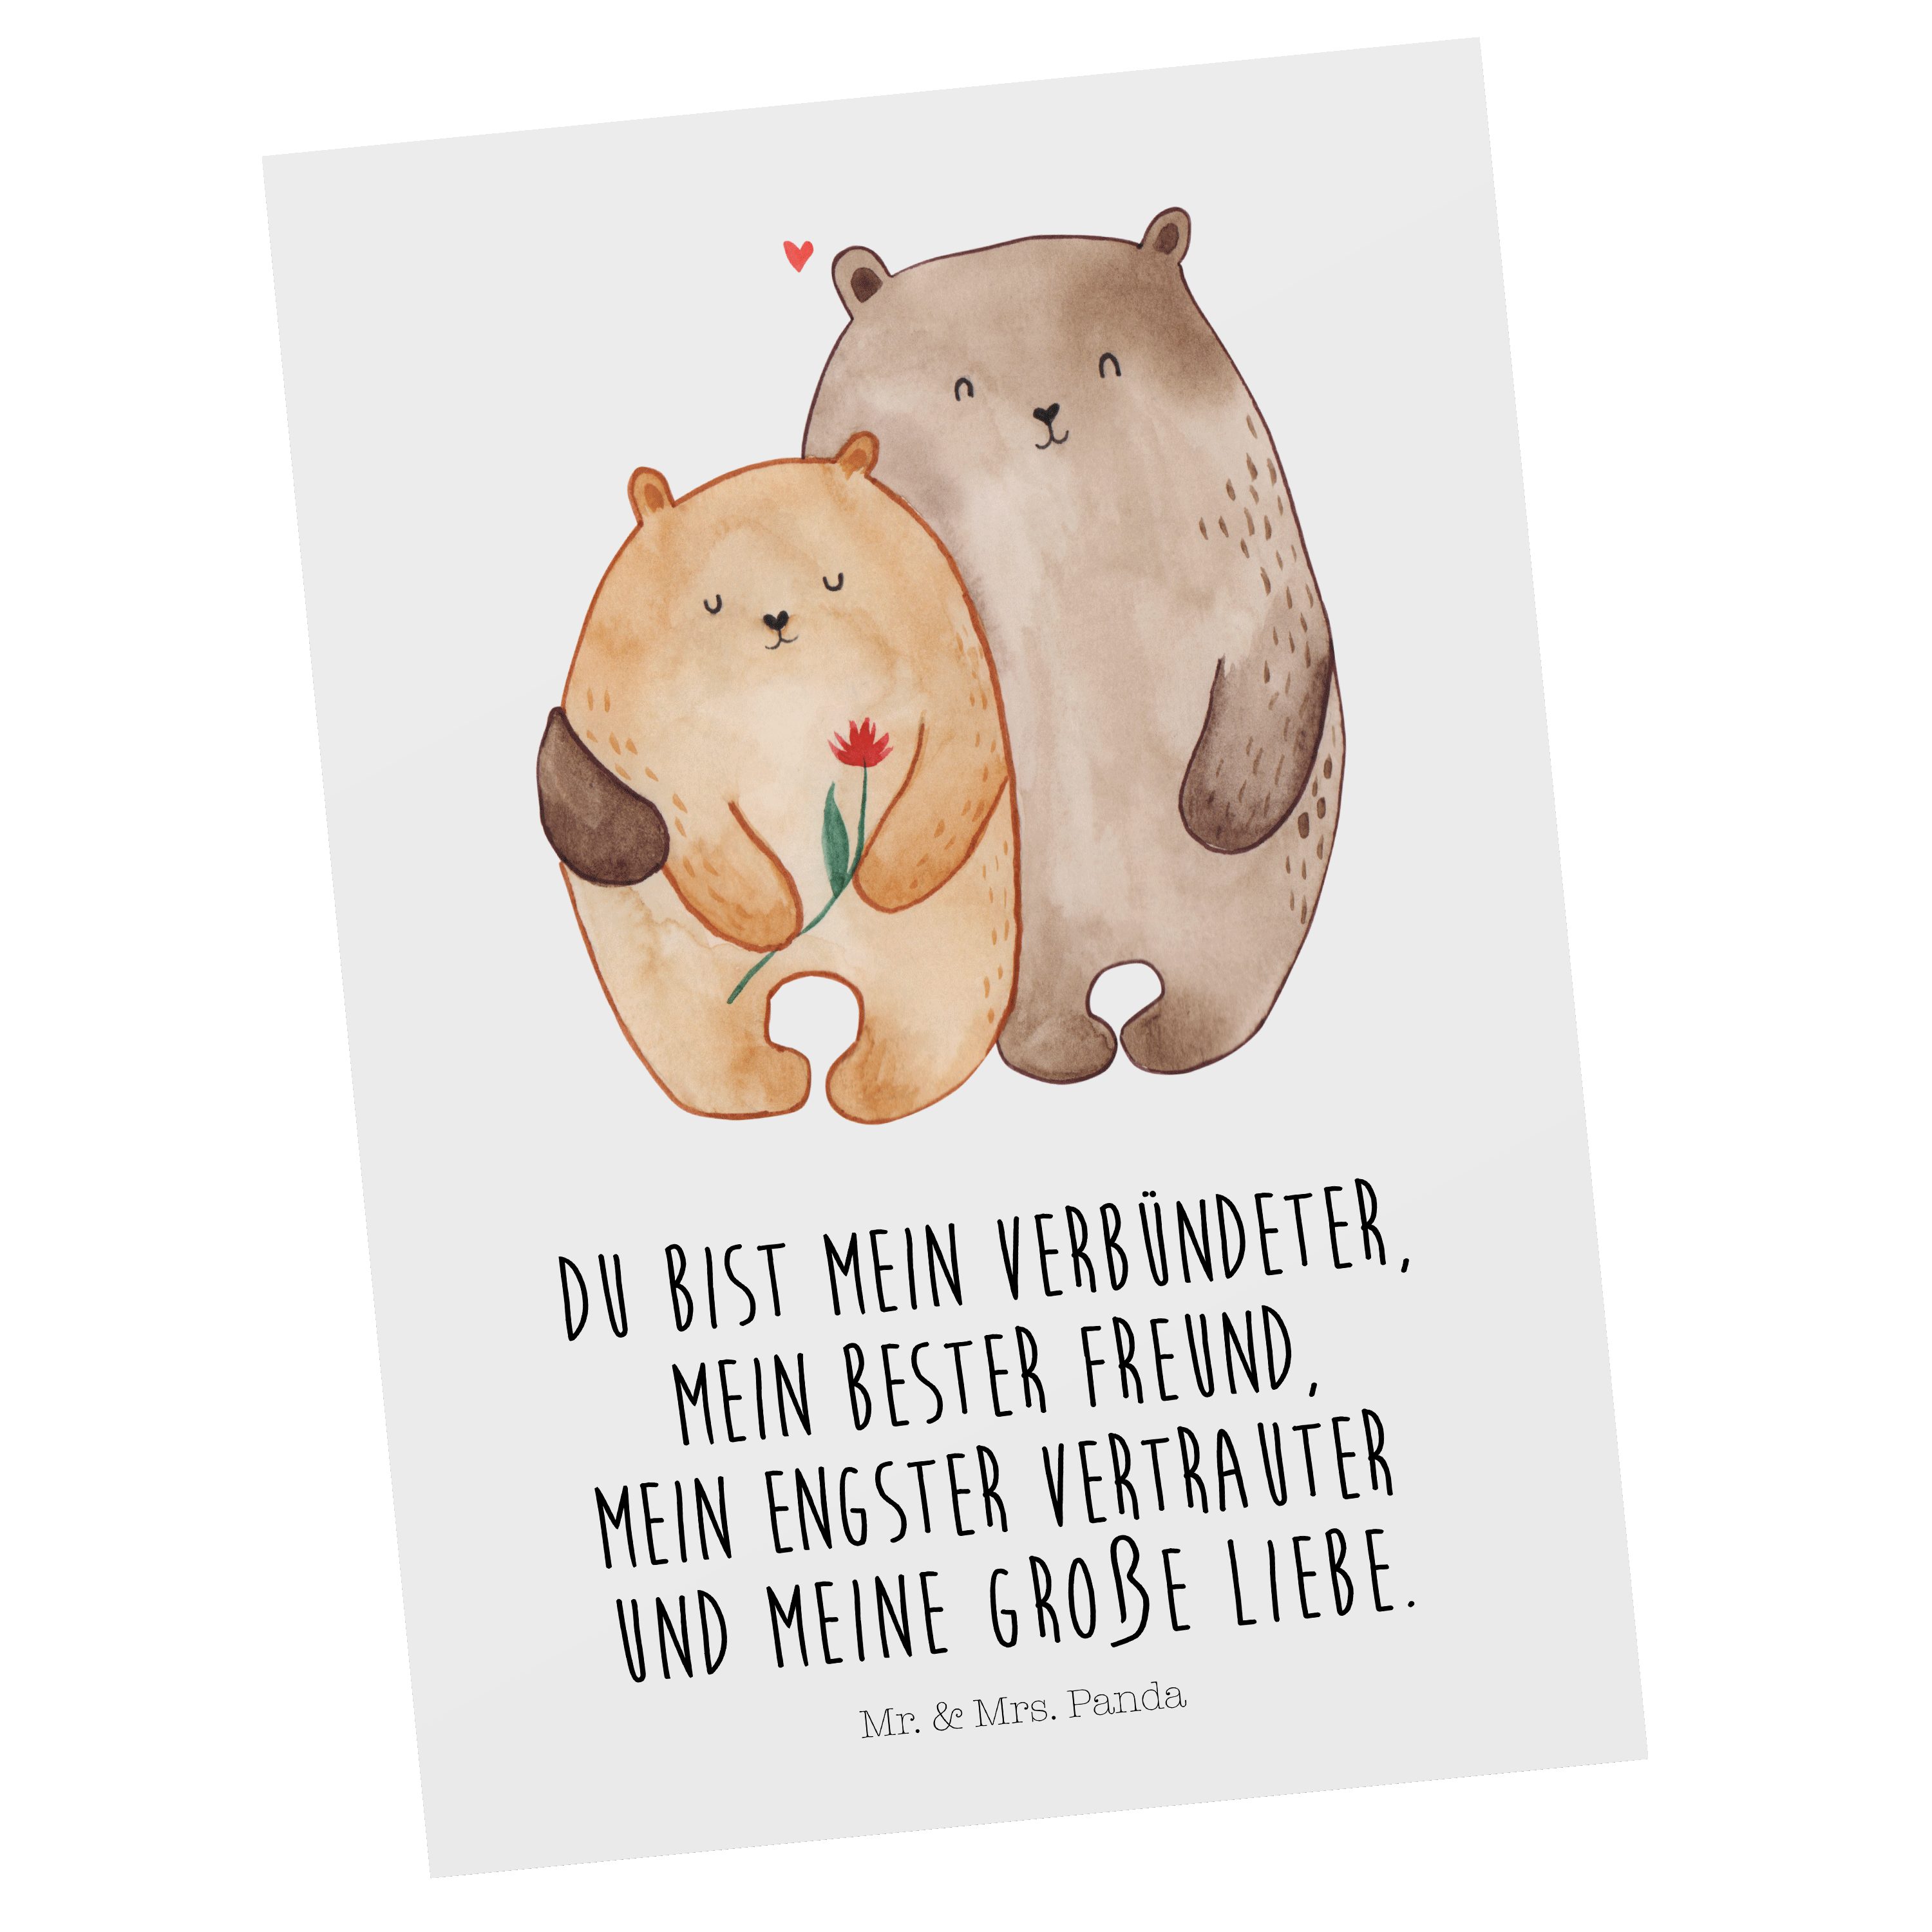 Postkarte Dankeskarte, Einladung, Freundin, Geschenk, Panda - Mrs. Part Liebe Mr. & Bären - Weiß